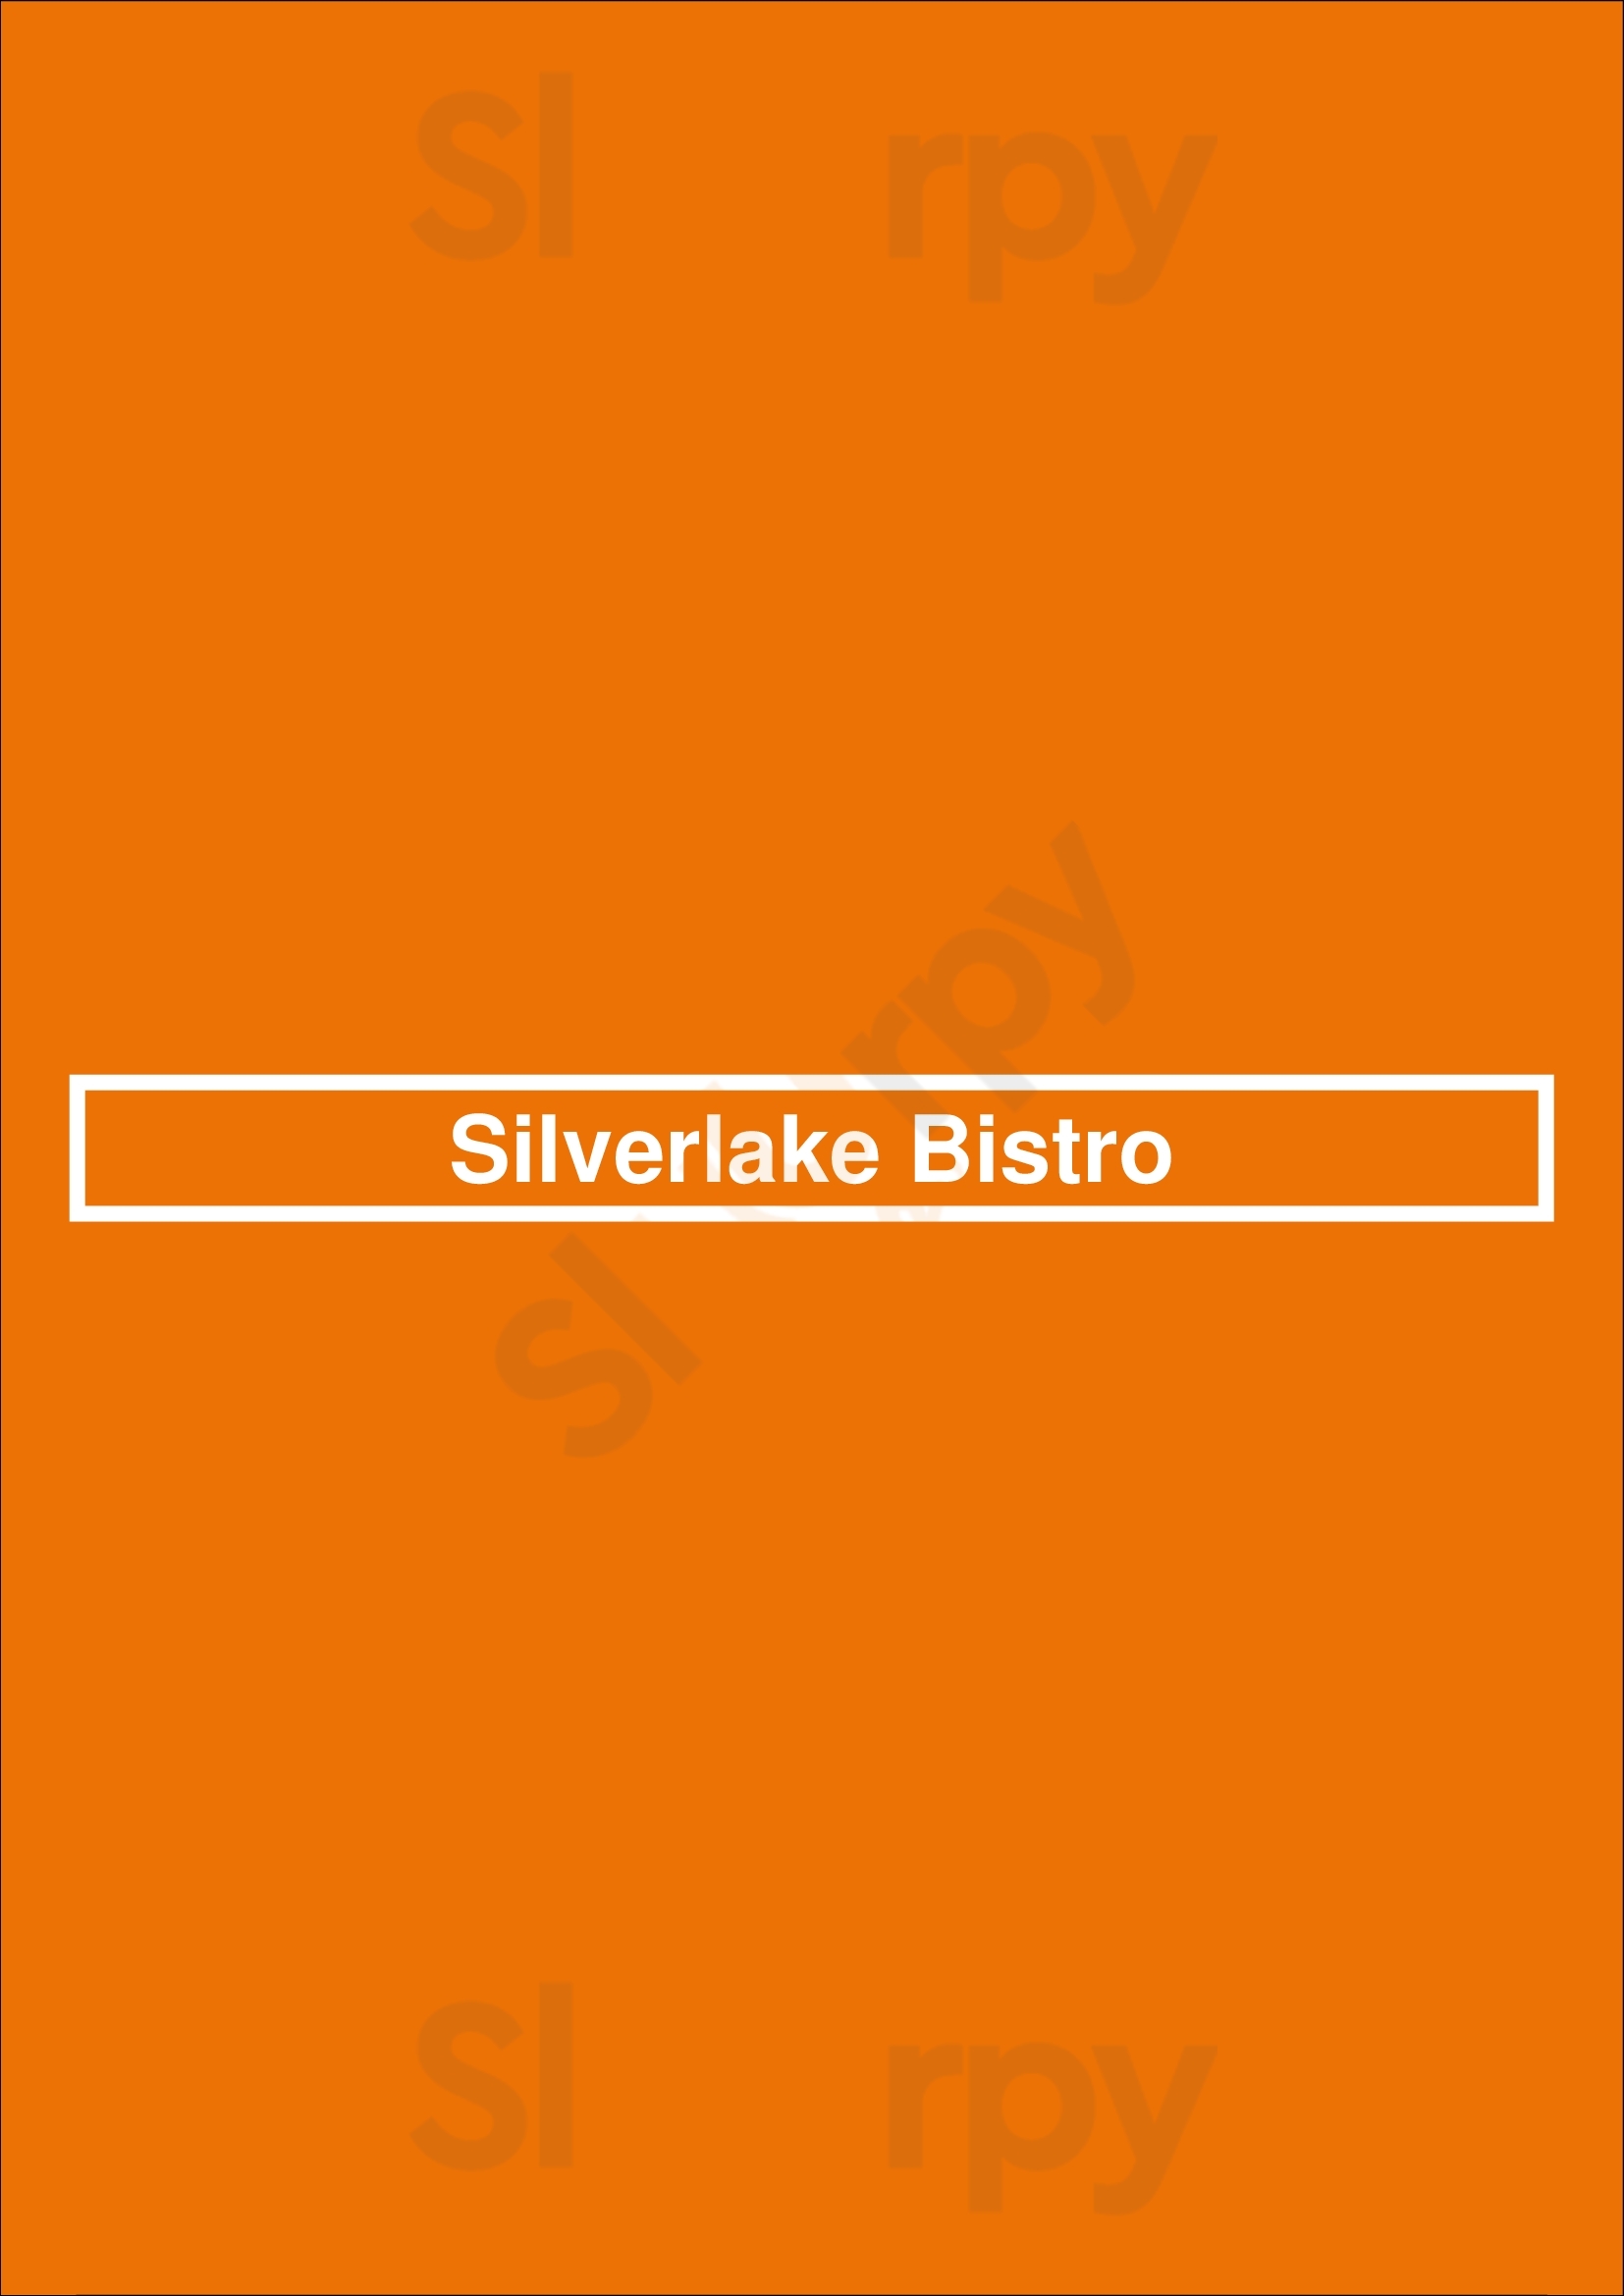 Silverlake Bistro Miami Beach Menu - 1